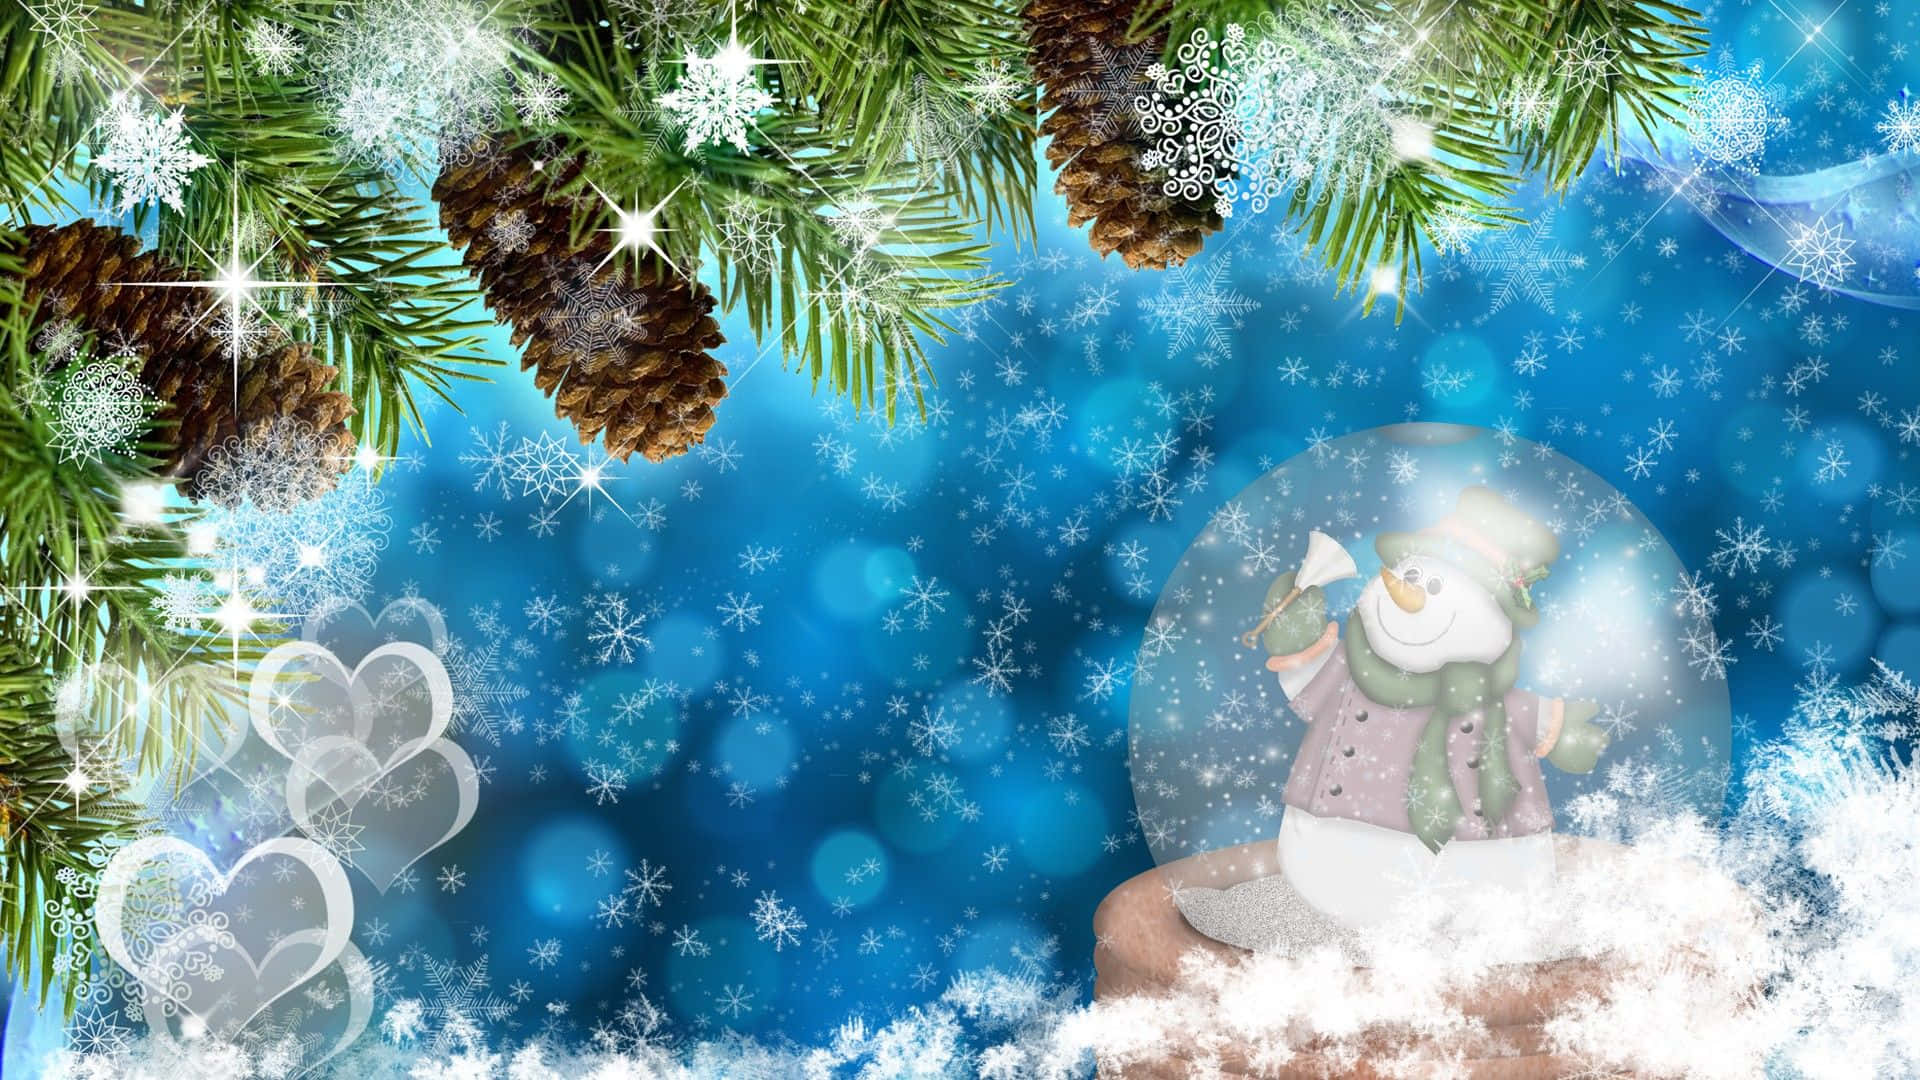 Winter Holiday Desktop Snowman And Pine Trees Wallpaper